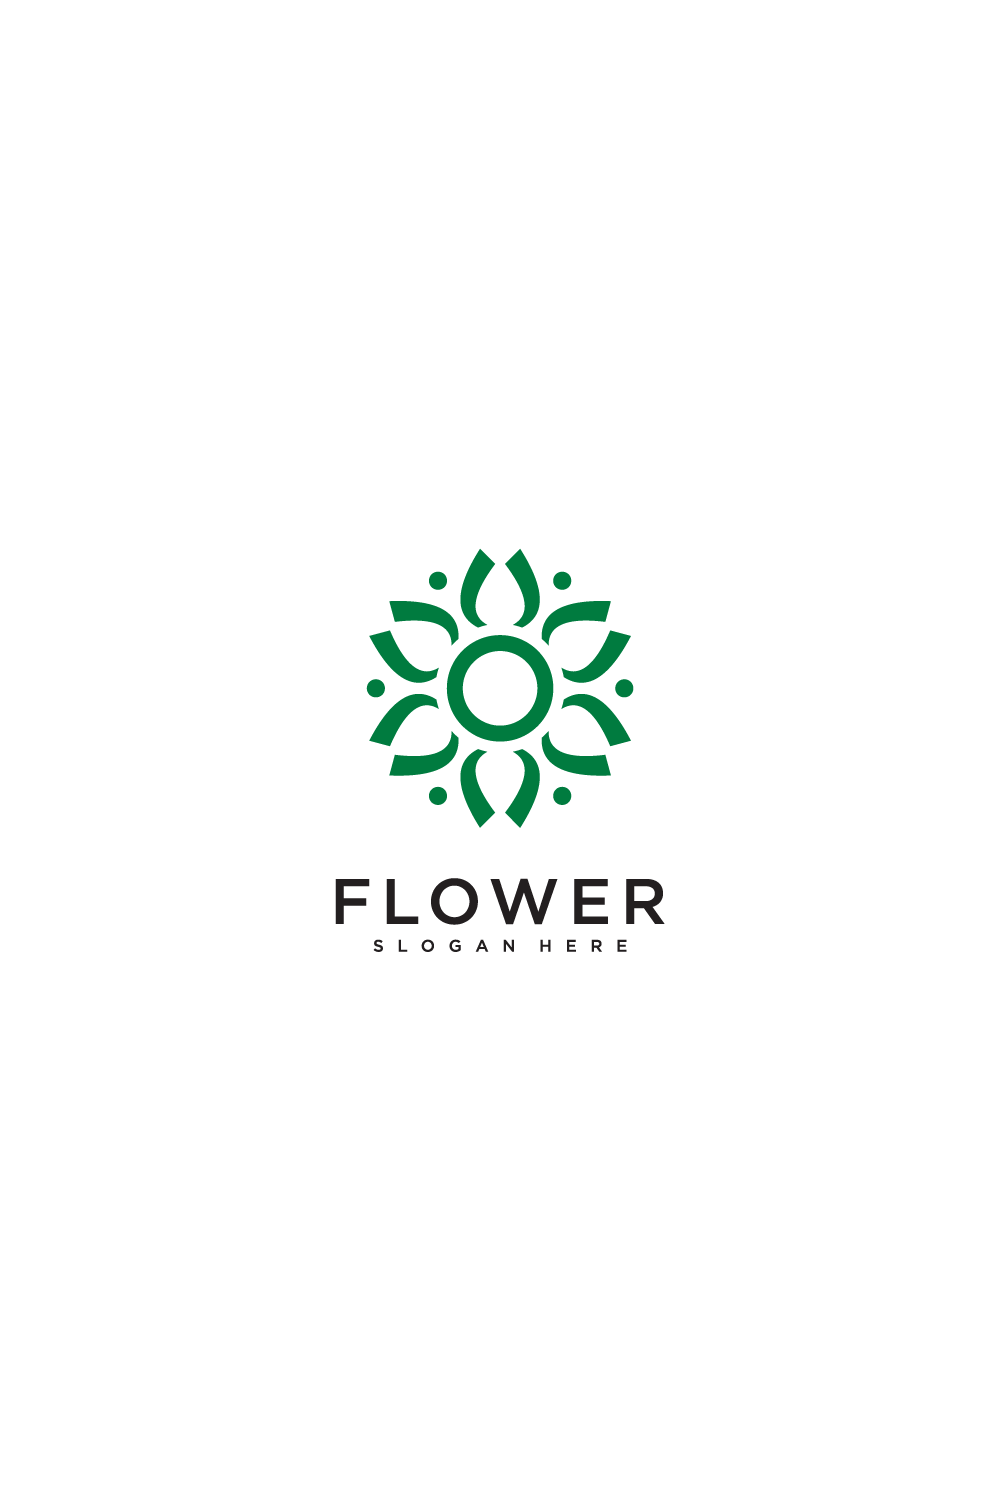 flower nature logo design template vector pinterest preview image.